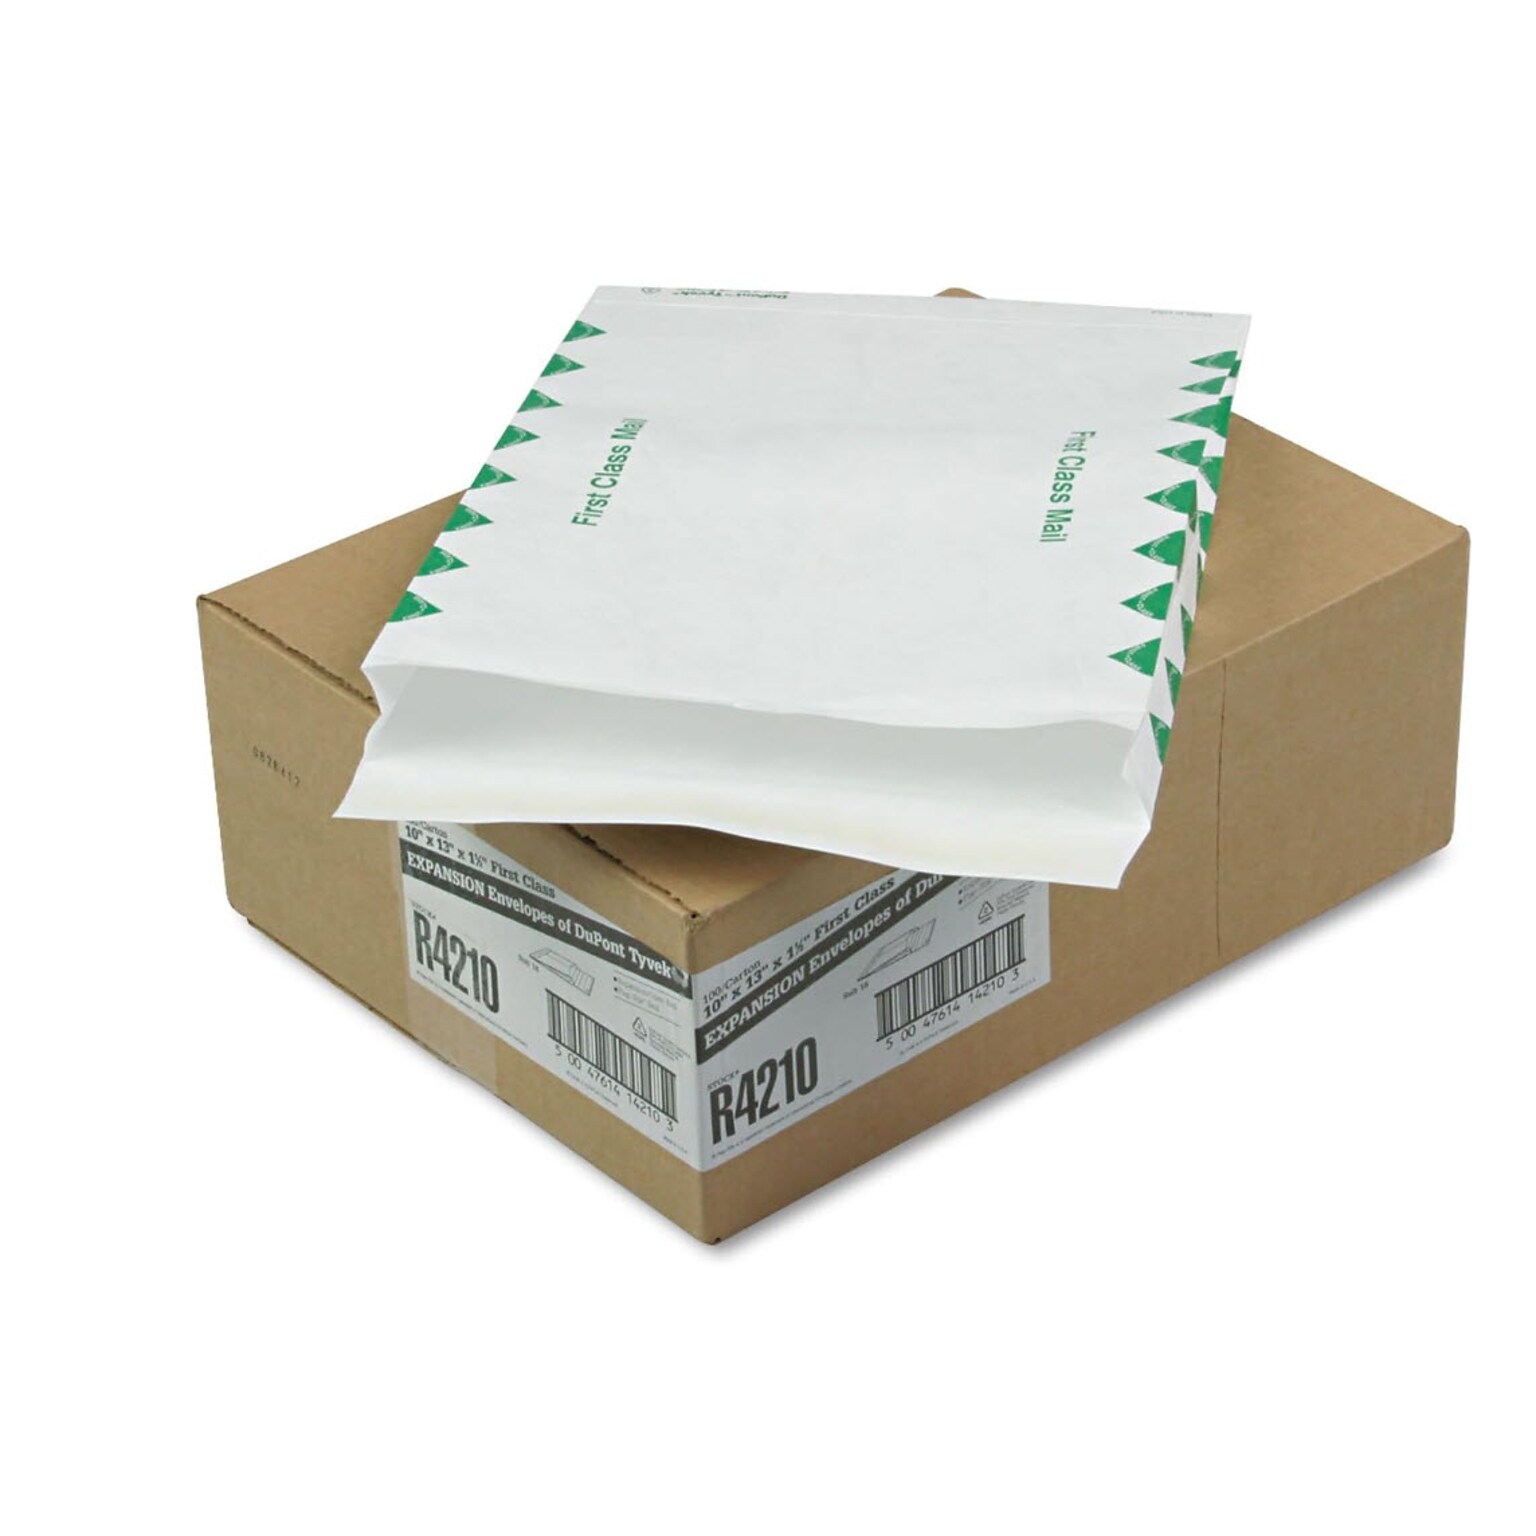 Quality Park Survivor First Class Tyvek Self Seal Catalog Envelope, 10 x 13, White, 100/Carton (R4210)